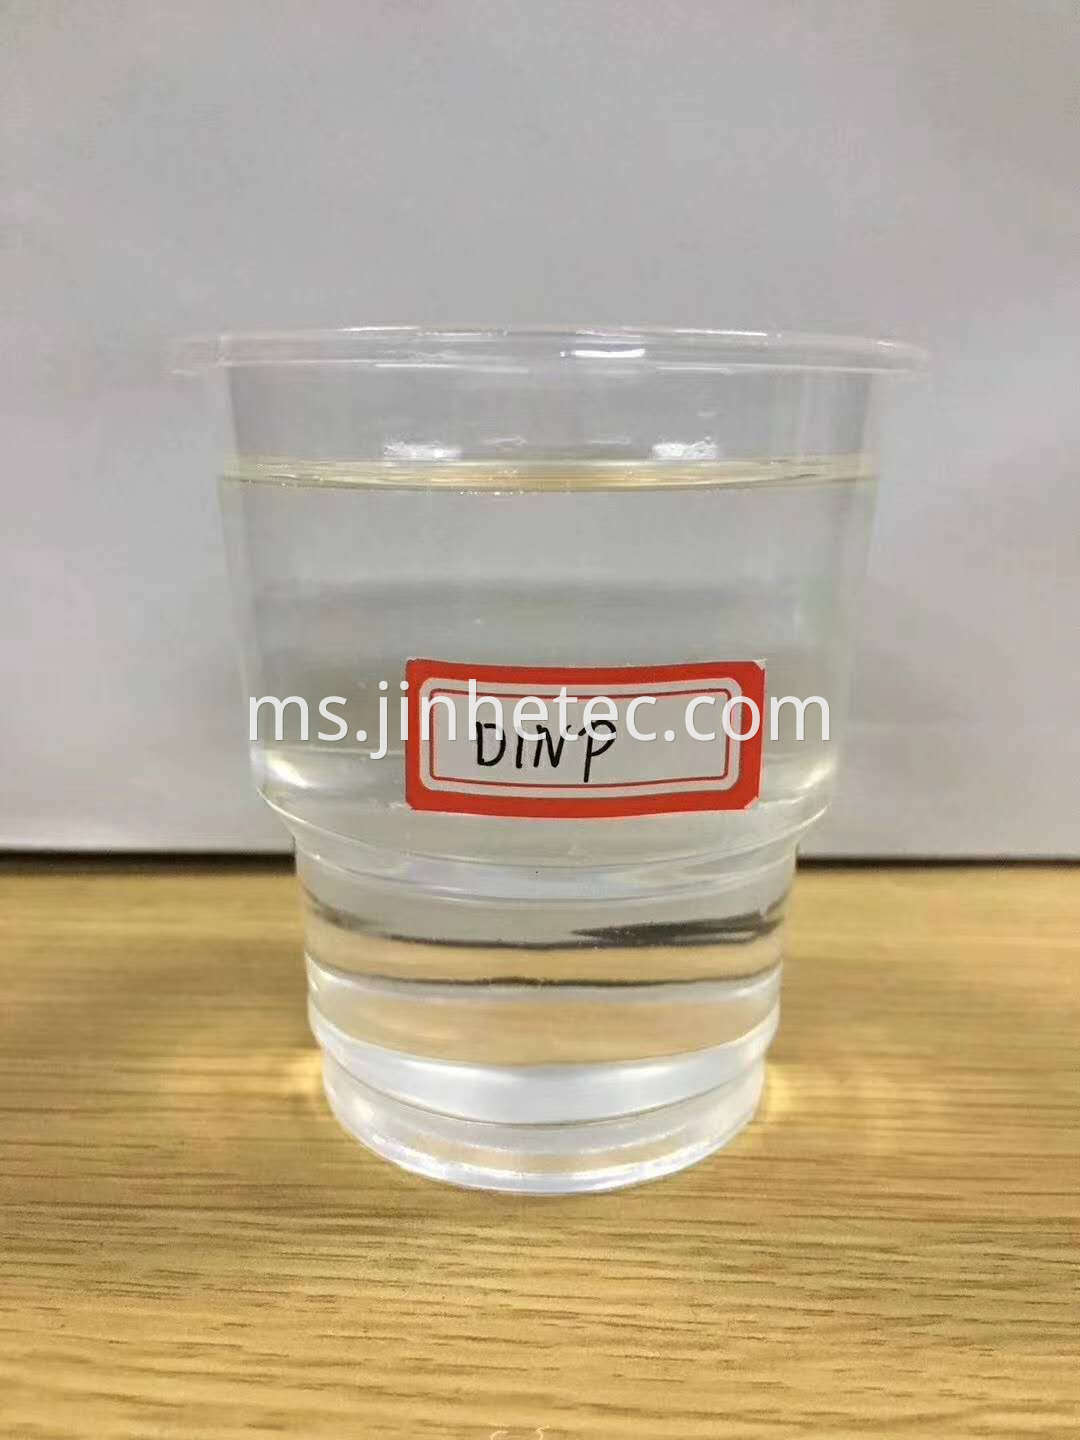 DINP As Plasticizer In Plastic Polyvinyl Chloride Resin